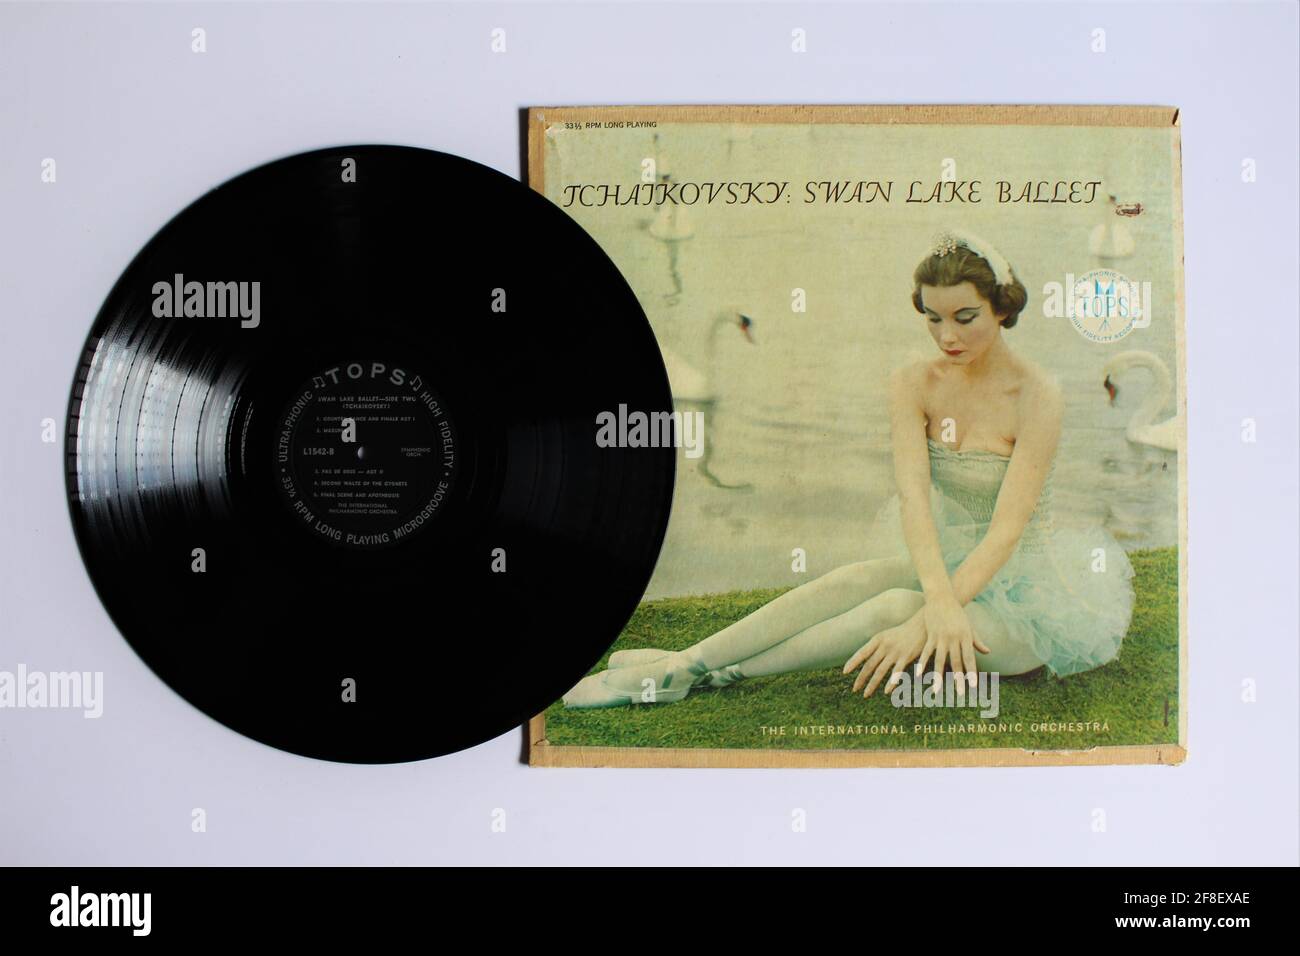 The International Philharmonic Orchestra – Tschaikowsky Swan Lake Ballet-Musikalbum auf Vinyl-LP-Schallplatte. Stockfoto